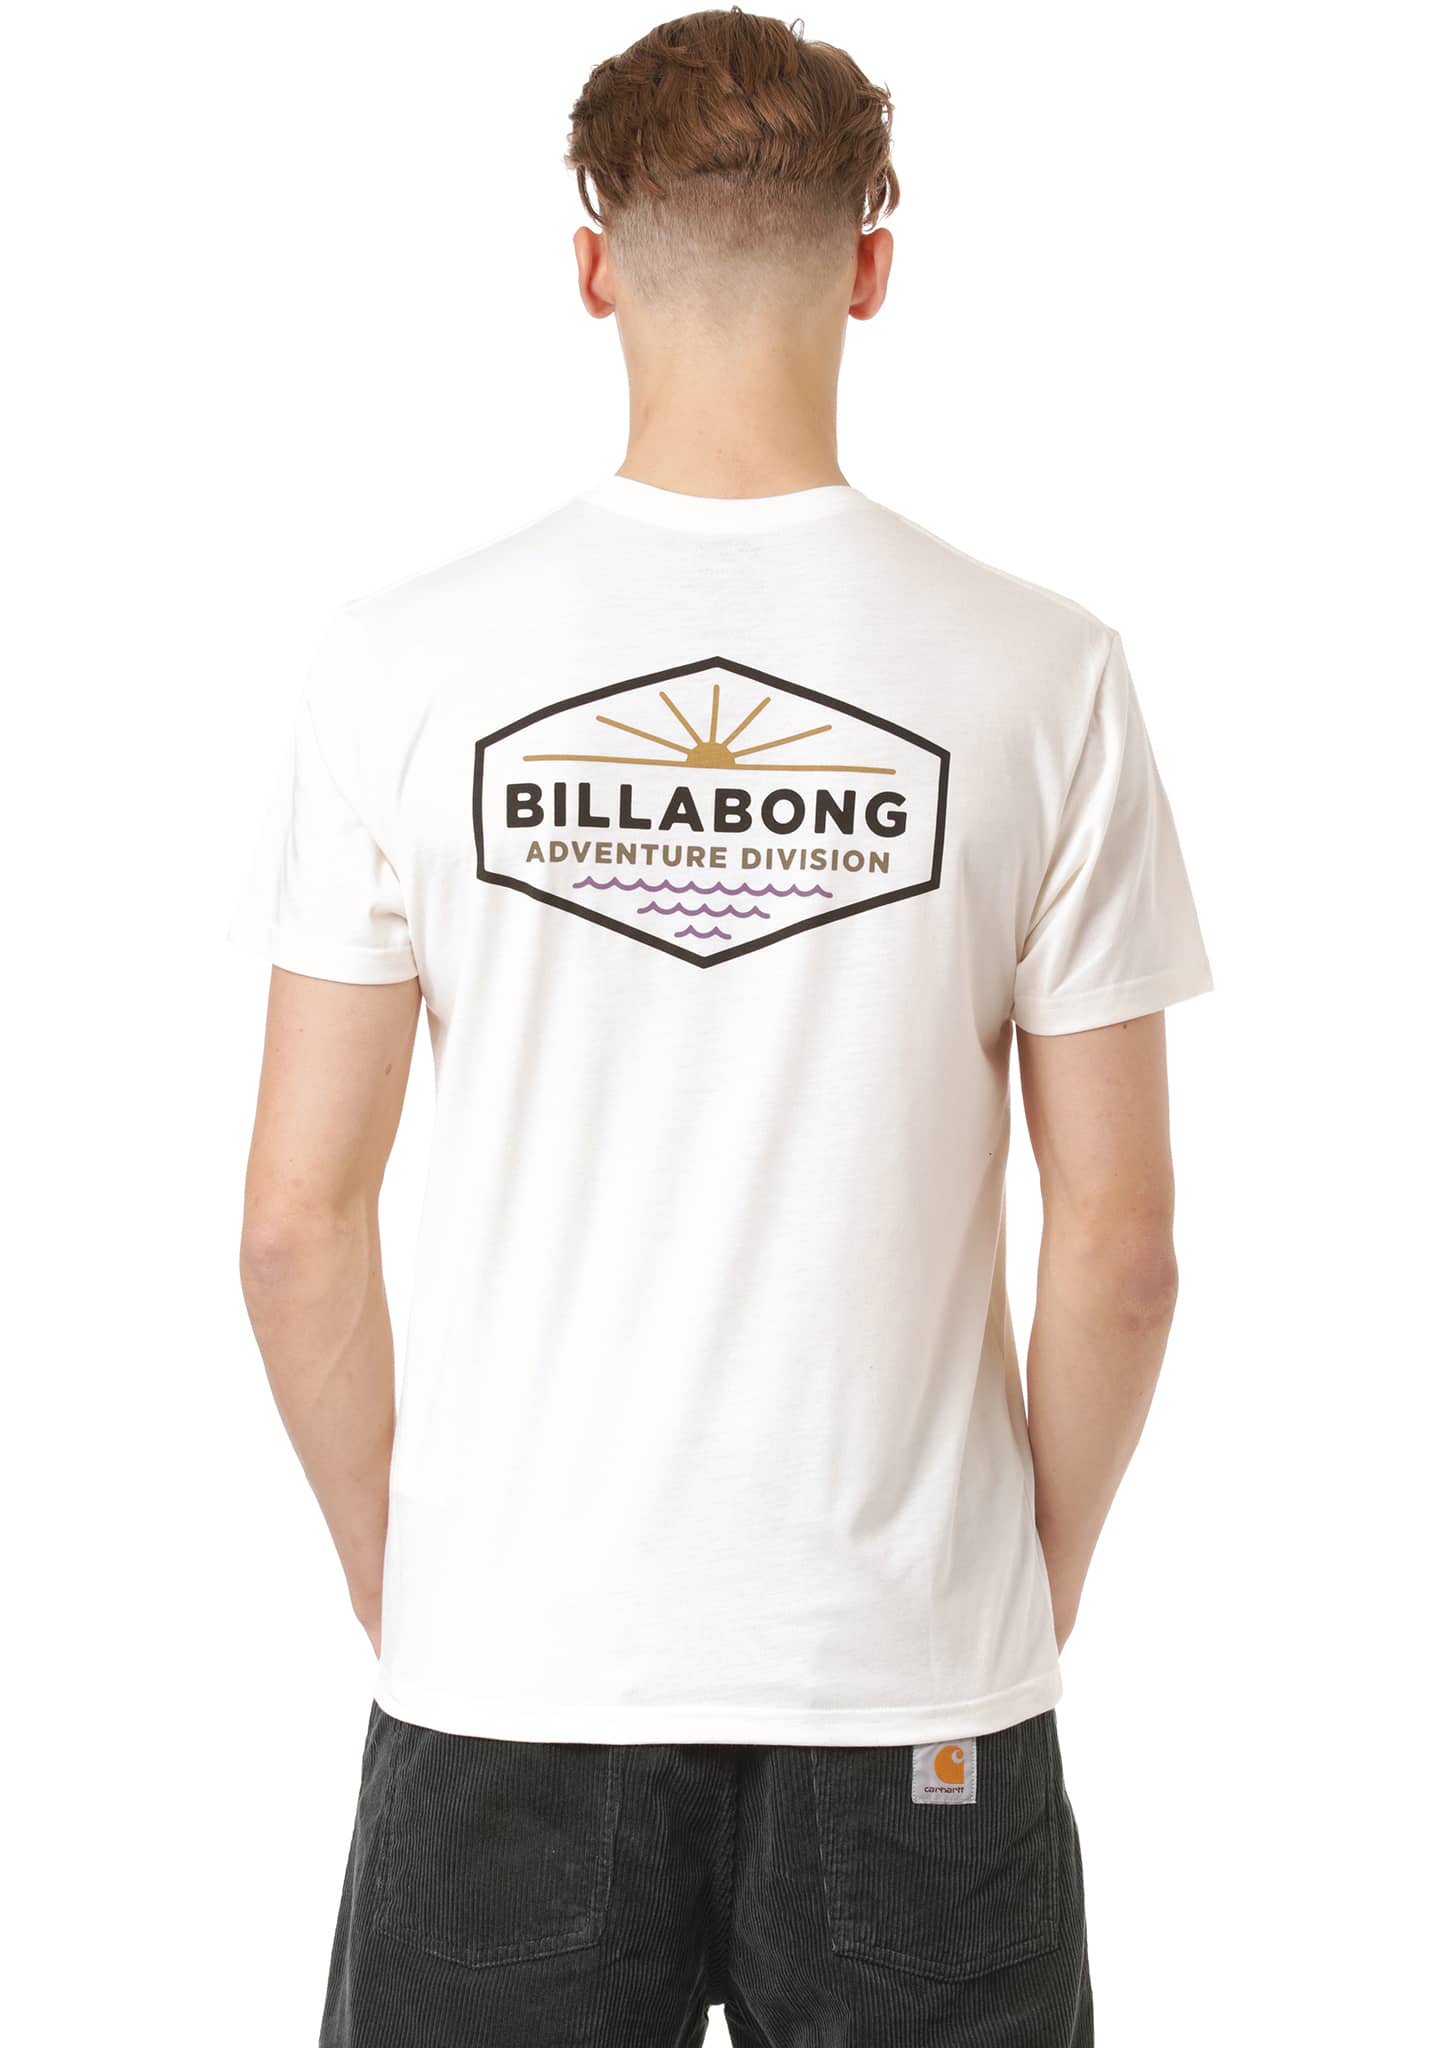 Billabong Cove T-Shirt greige L